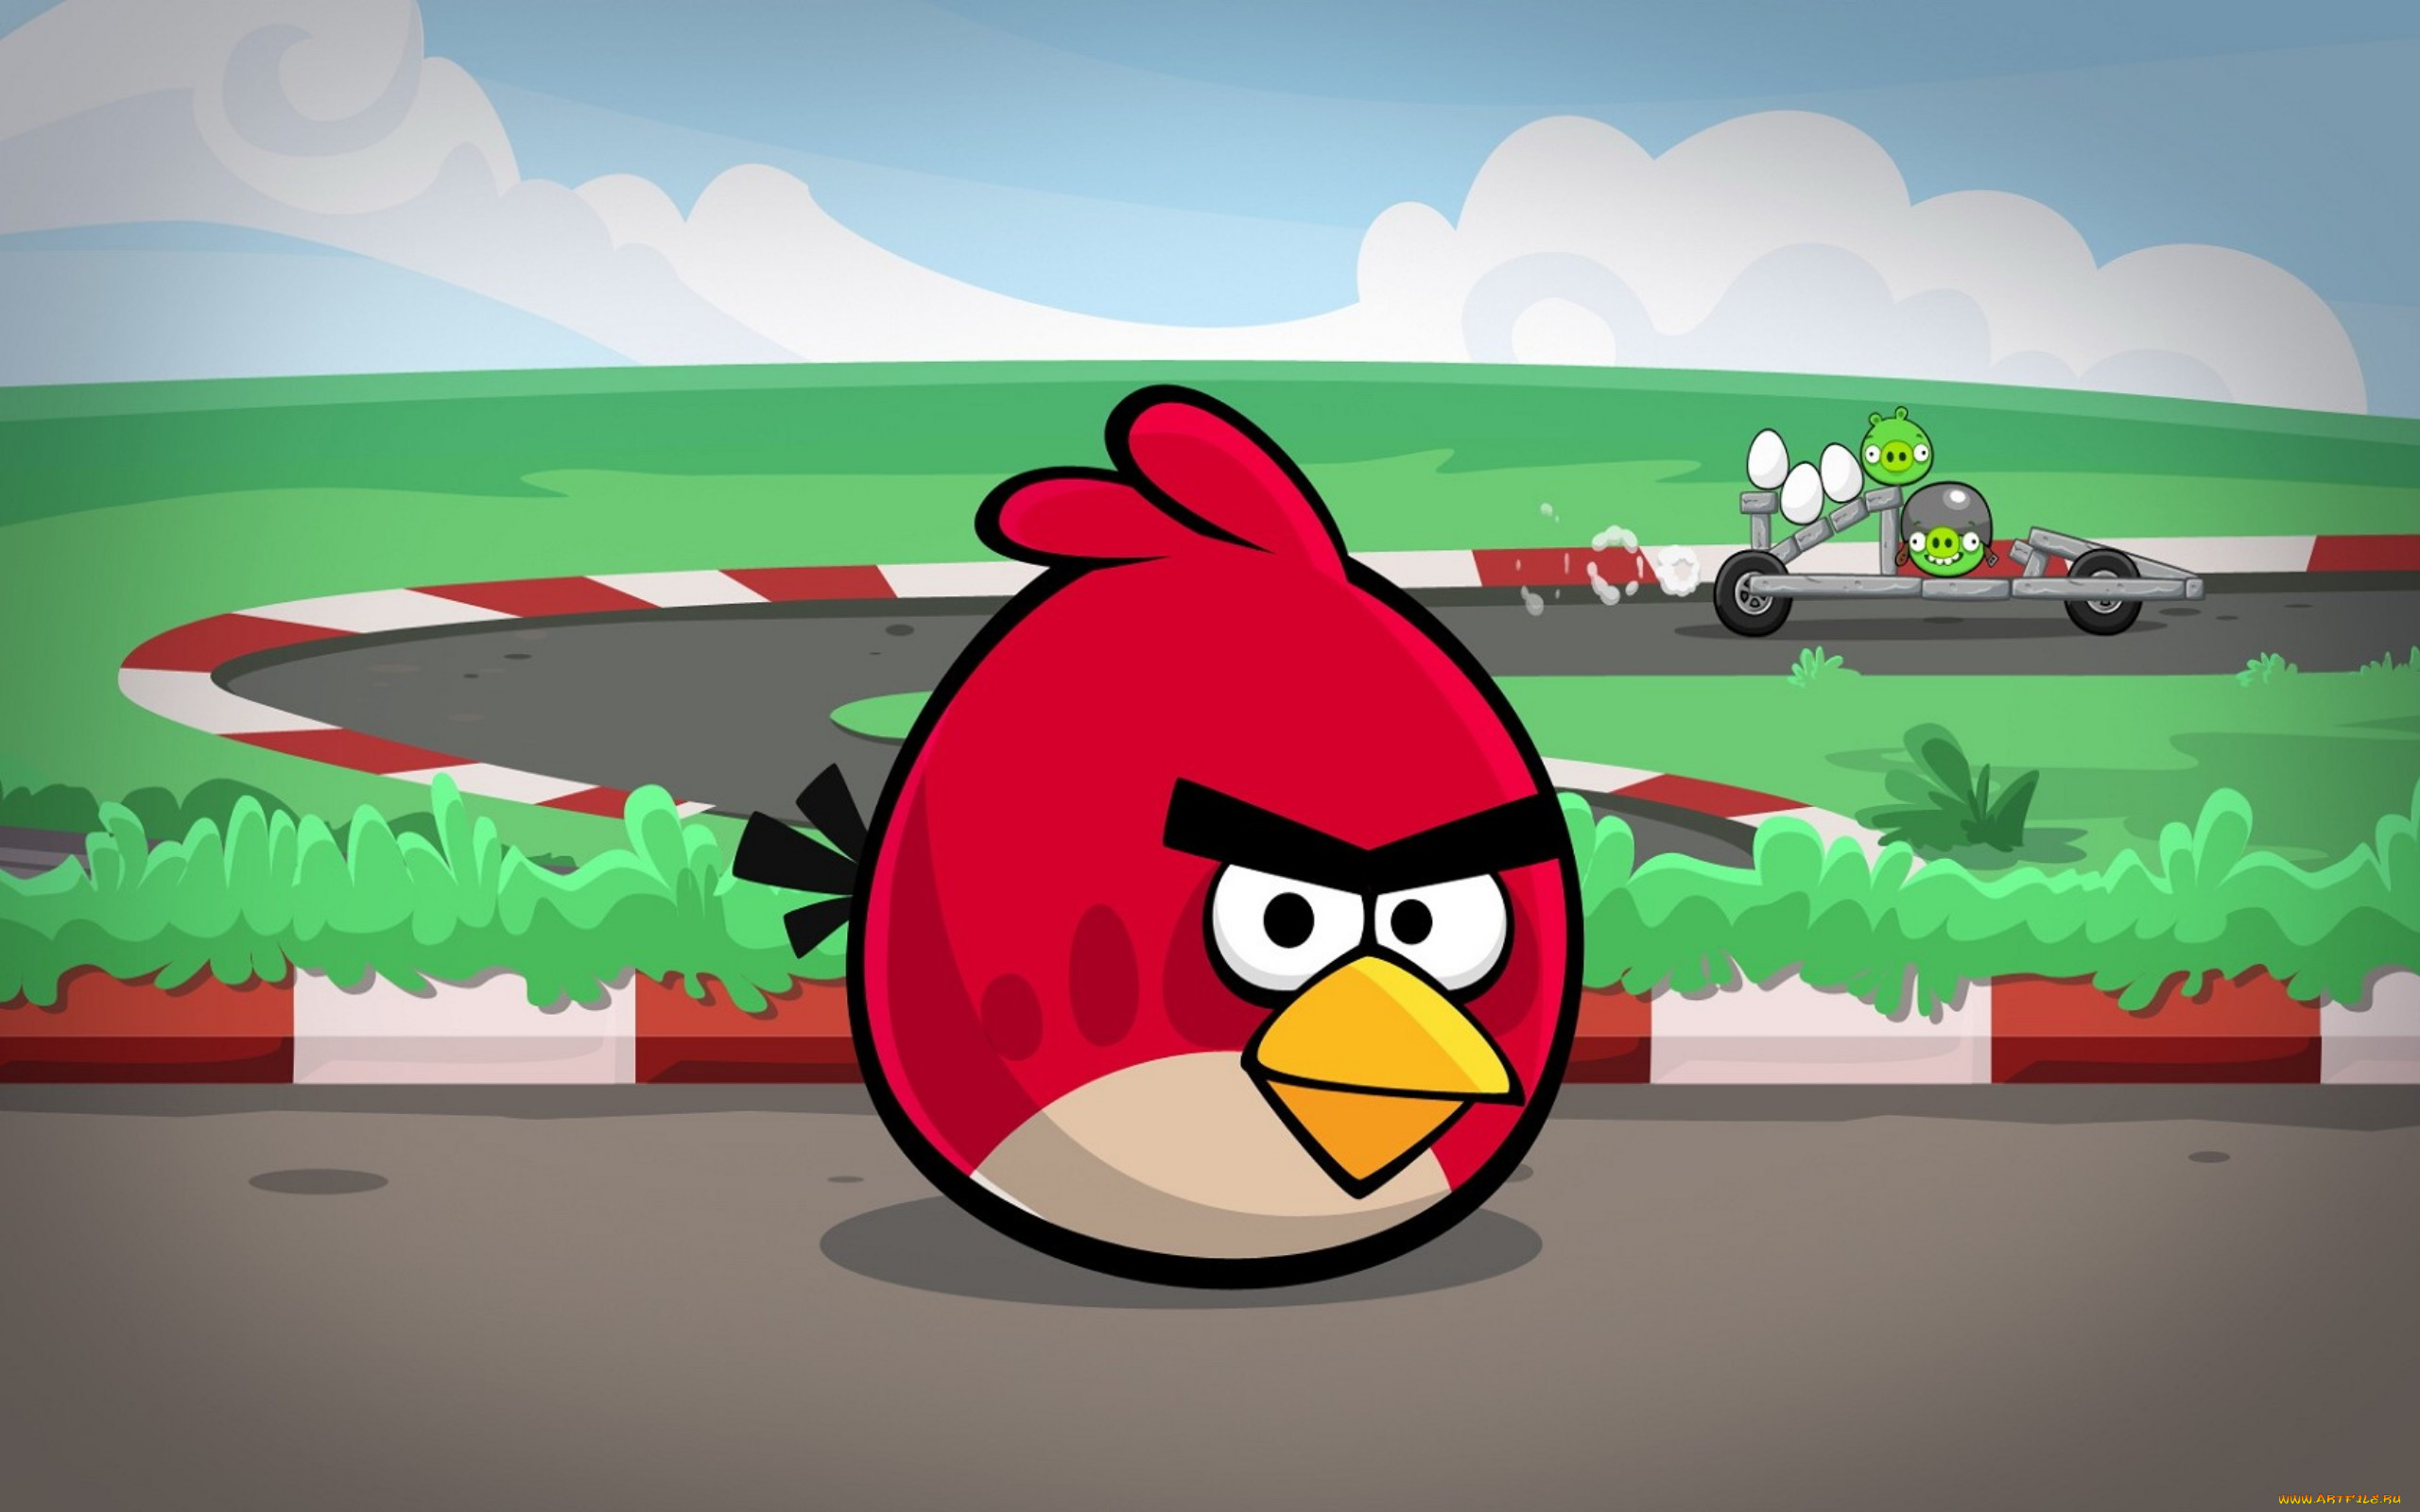 Игра енгрибердс. Ангрибёрдс злые птенчики. Игра Angry Birds Red. Энгри бердз бердз. Ангри берс 3.